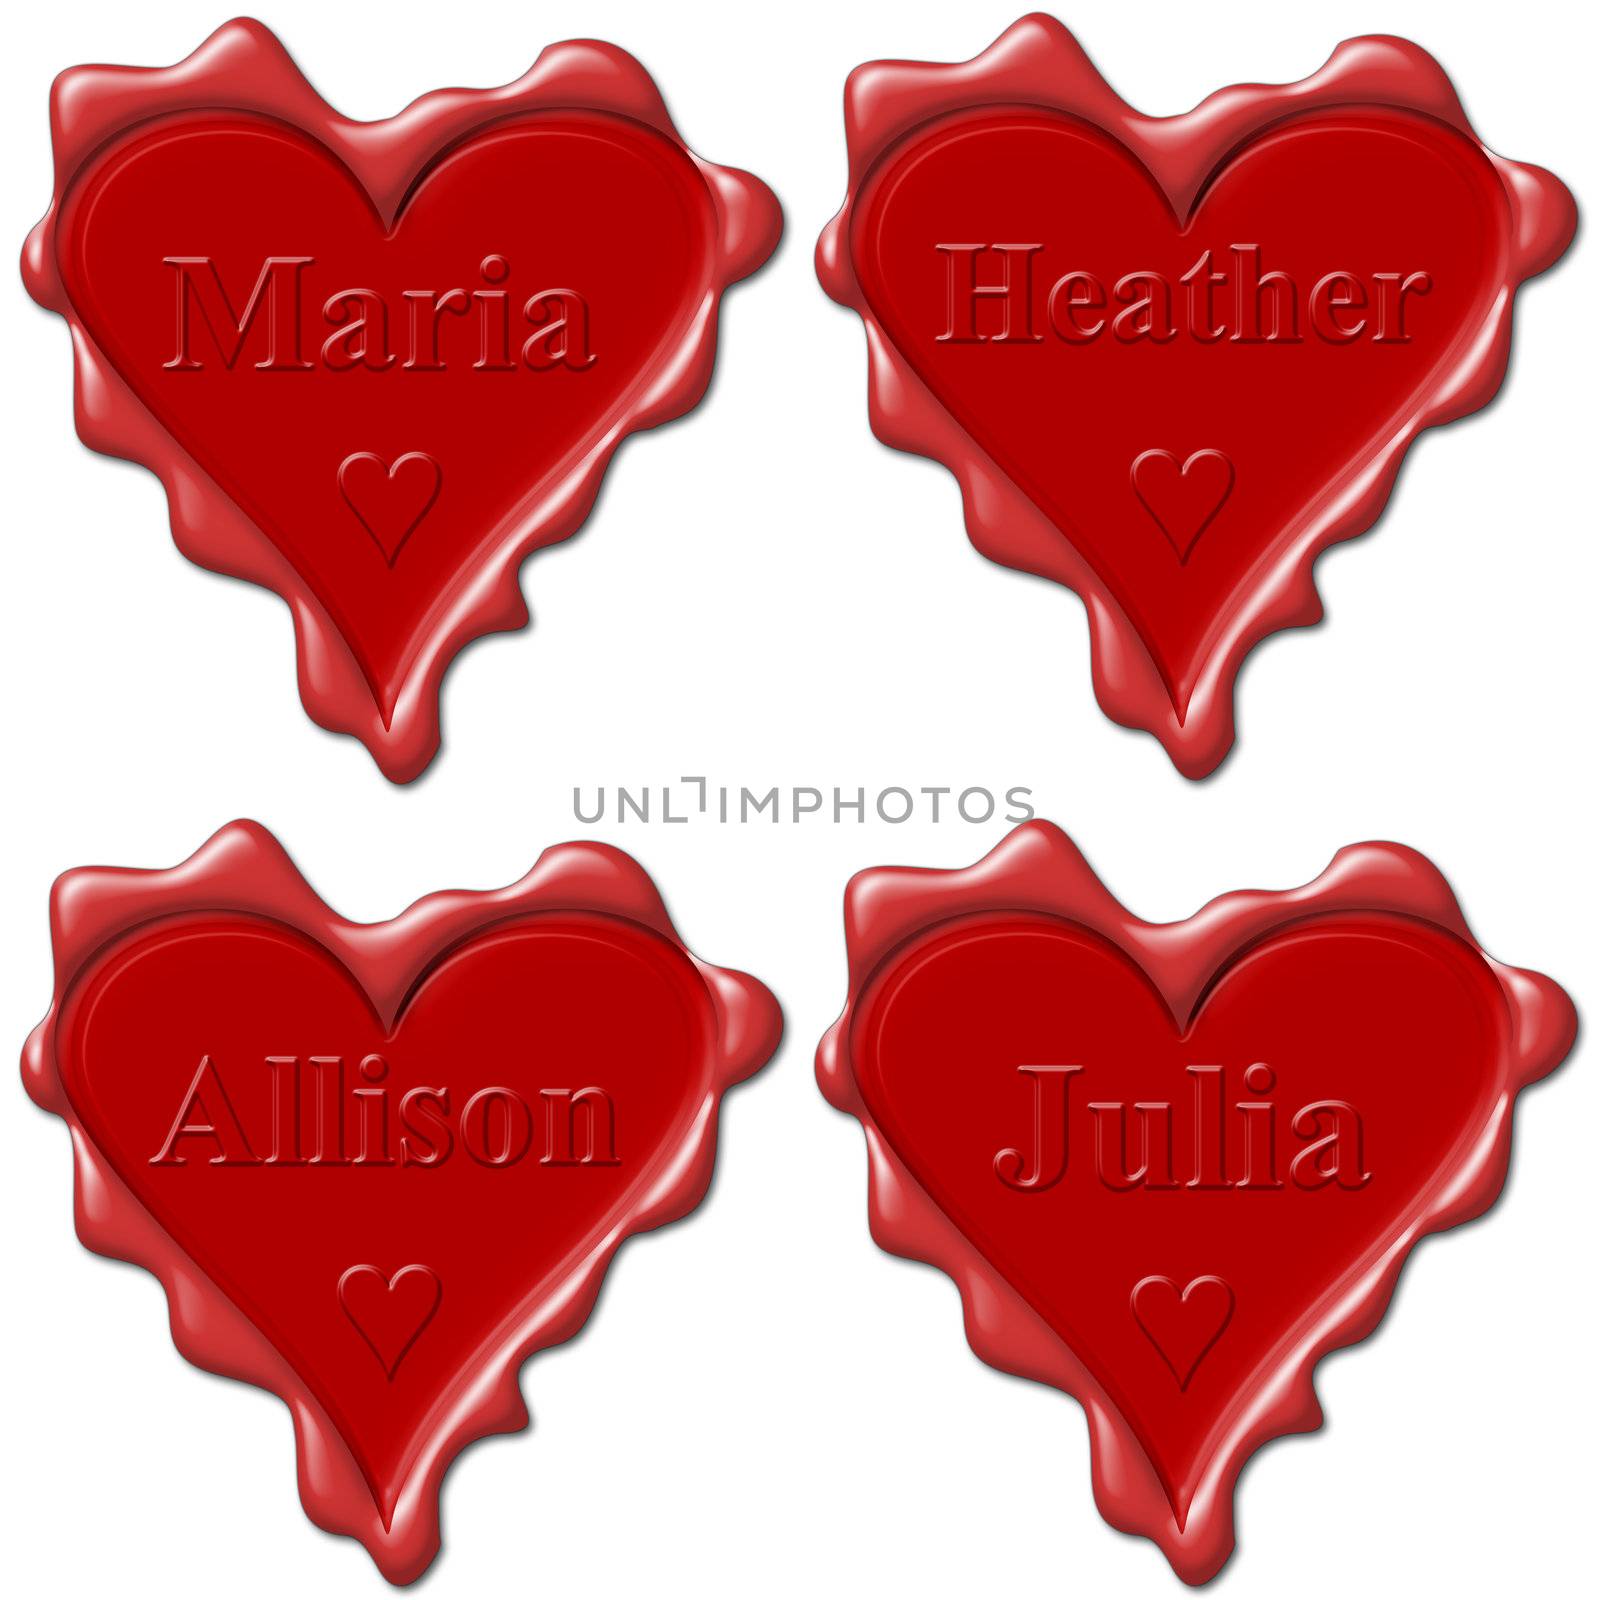 Valentine love hearts with names: Maria, Heather, Allison, Julia